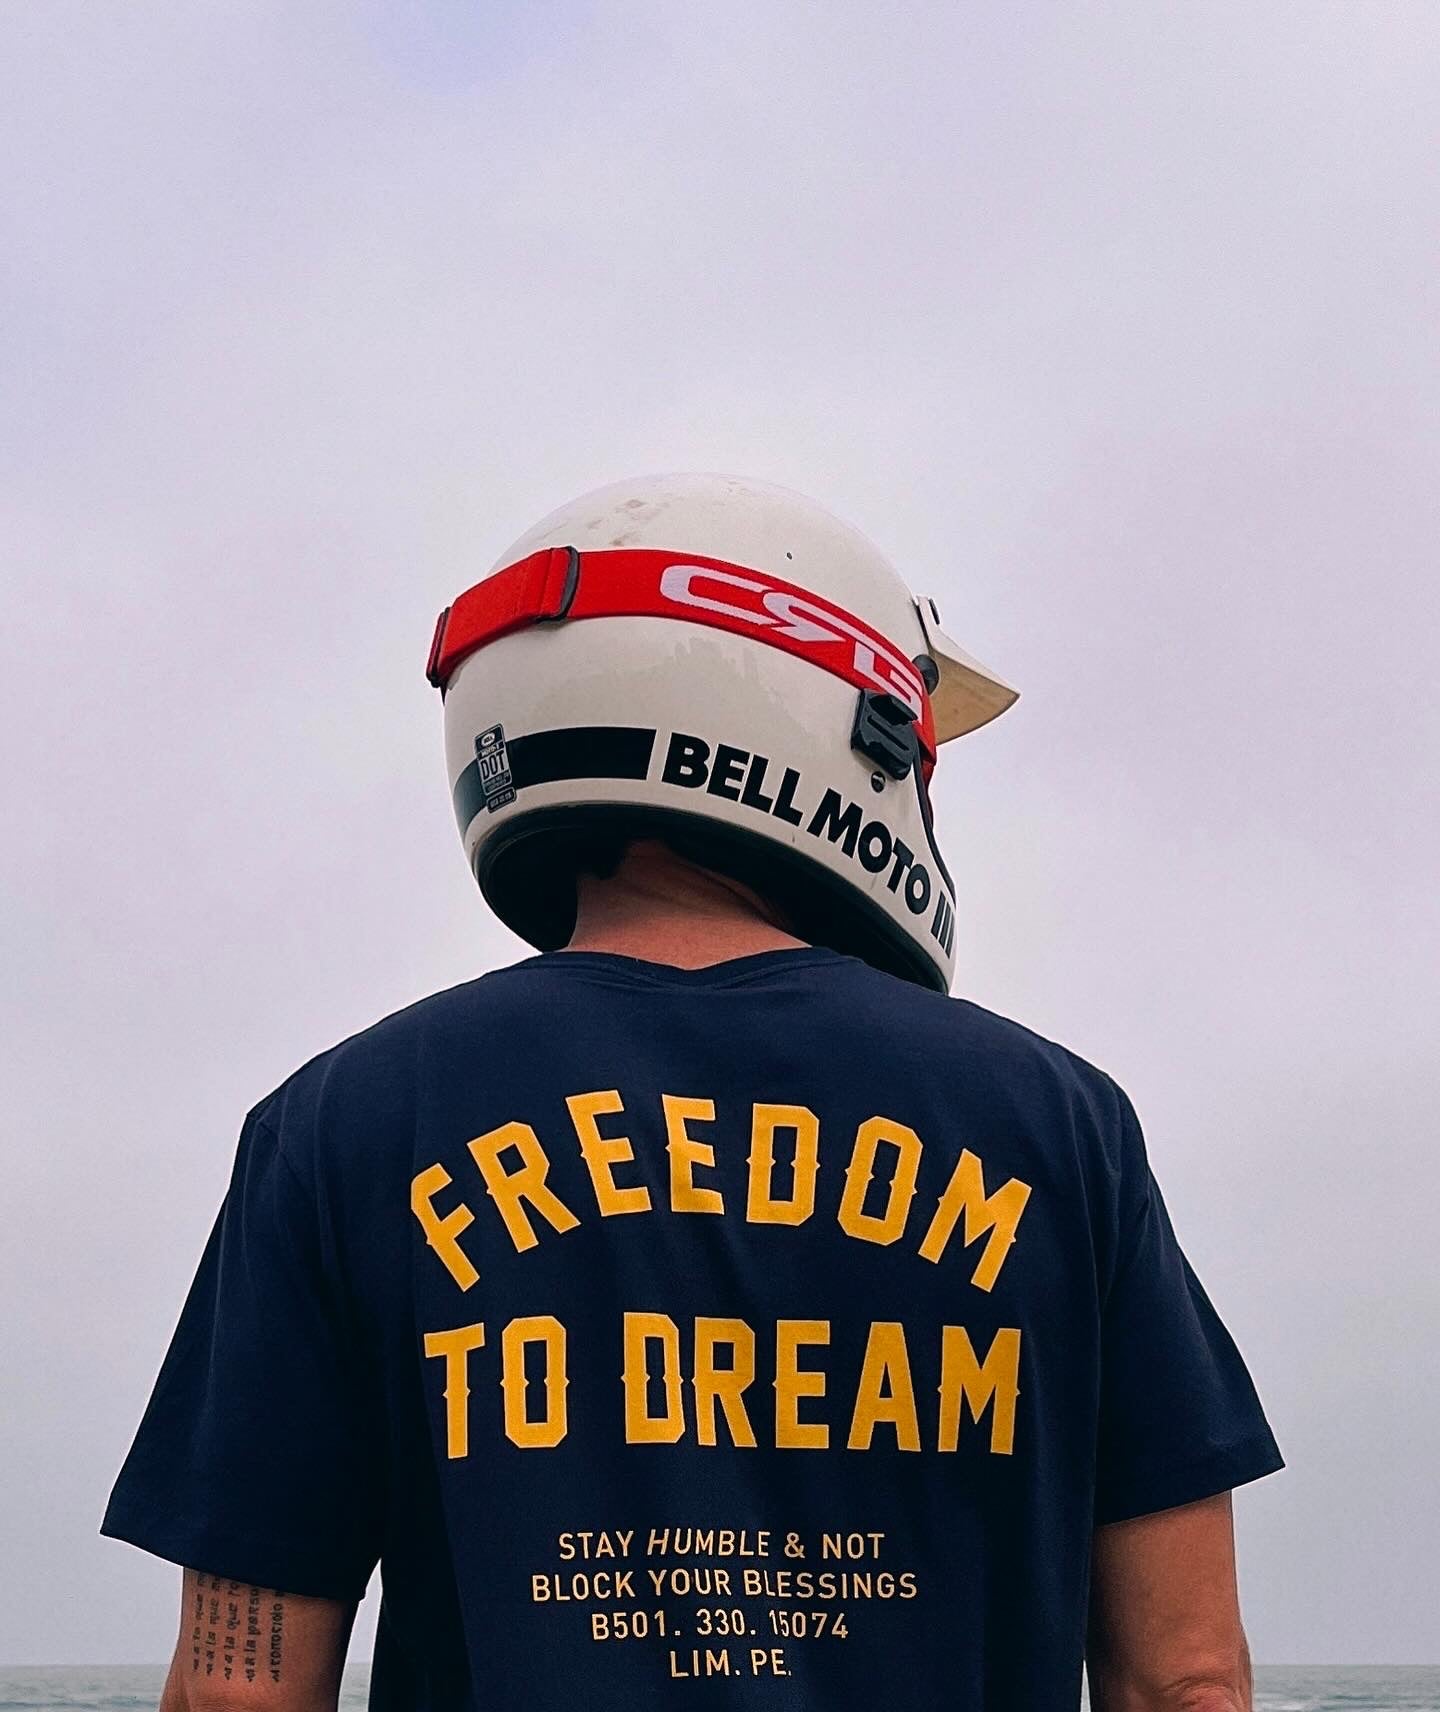 *FREEDOM TO DREAM*